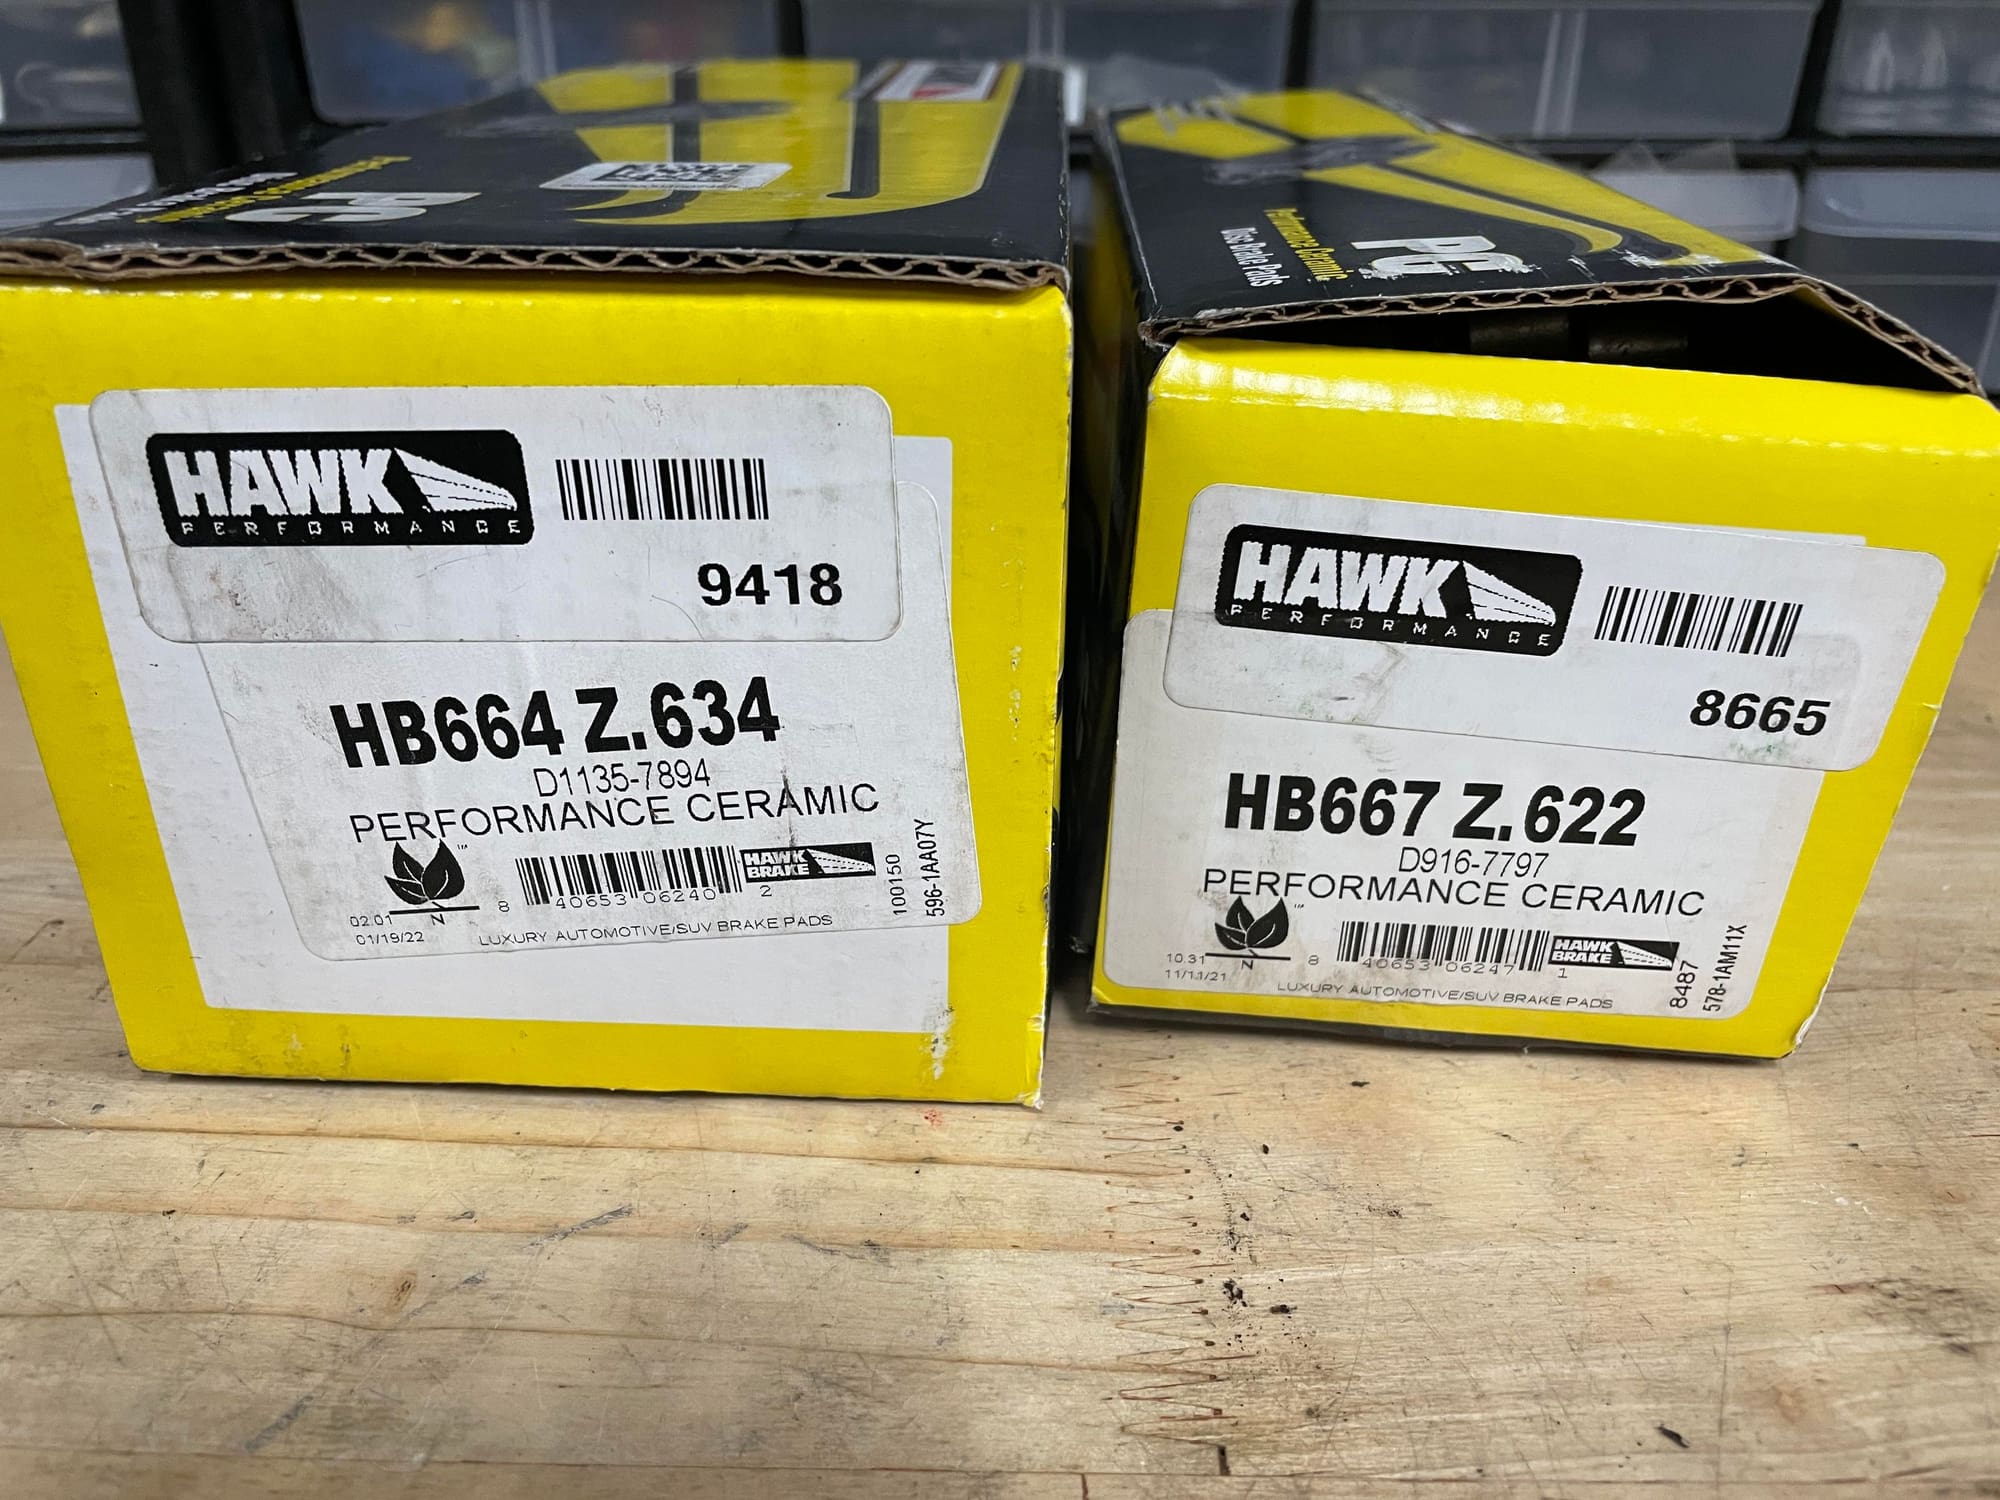 Brakes - 997 / 987 Hawk Performance Ceramic Brake Pads - Used - All Years  All Models - All Years  All Models - Austin, TX 78701, United States